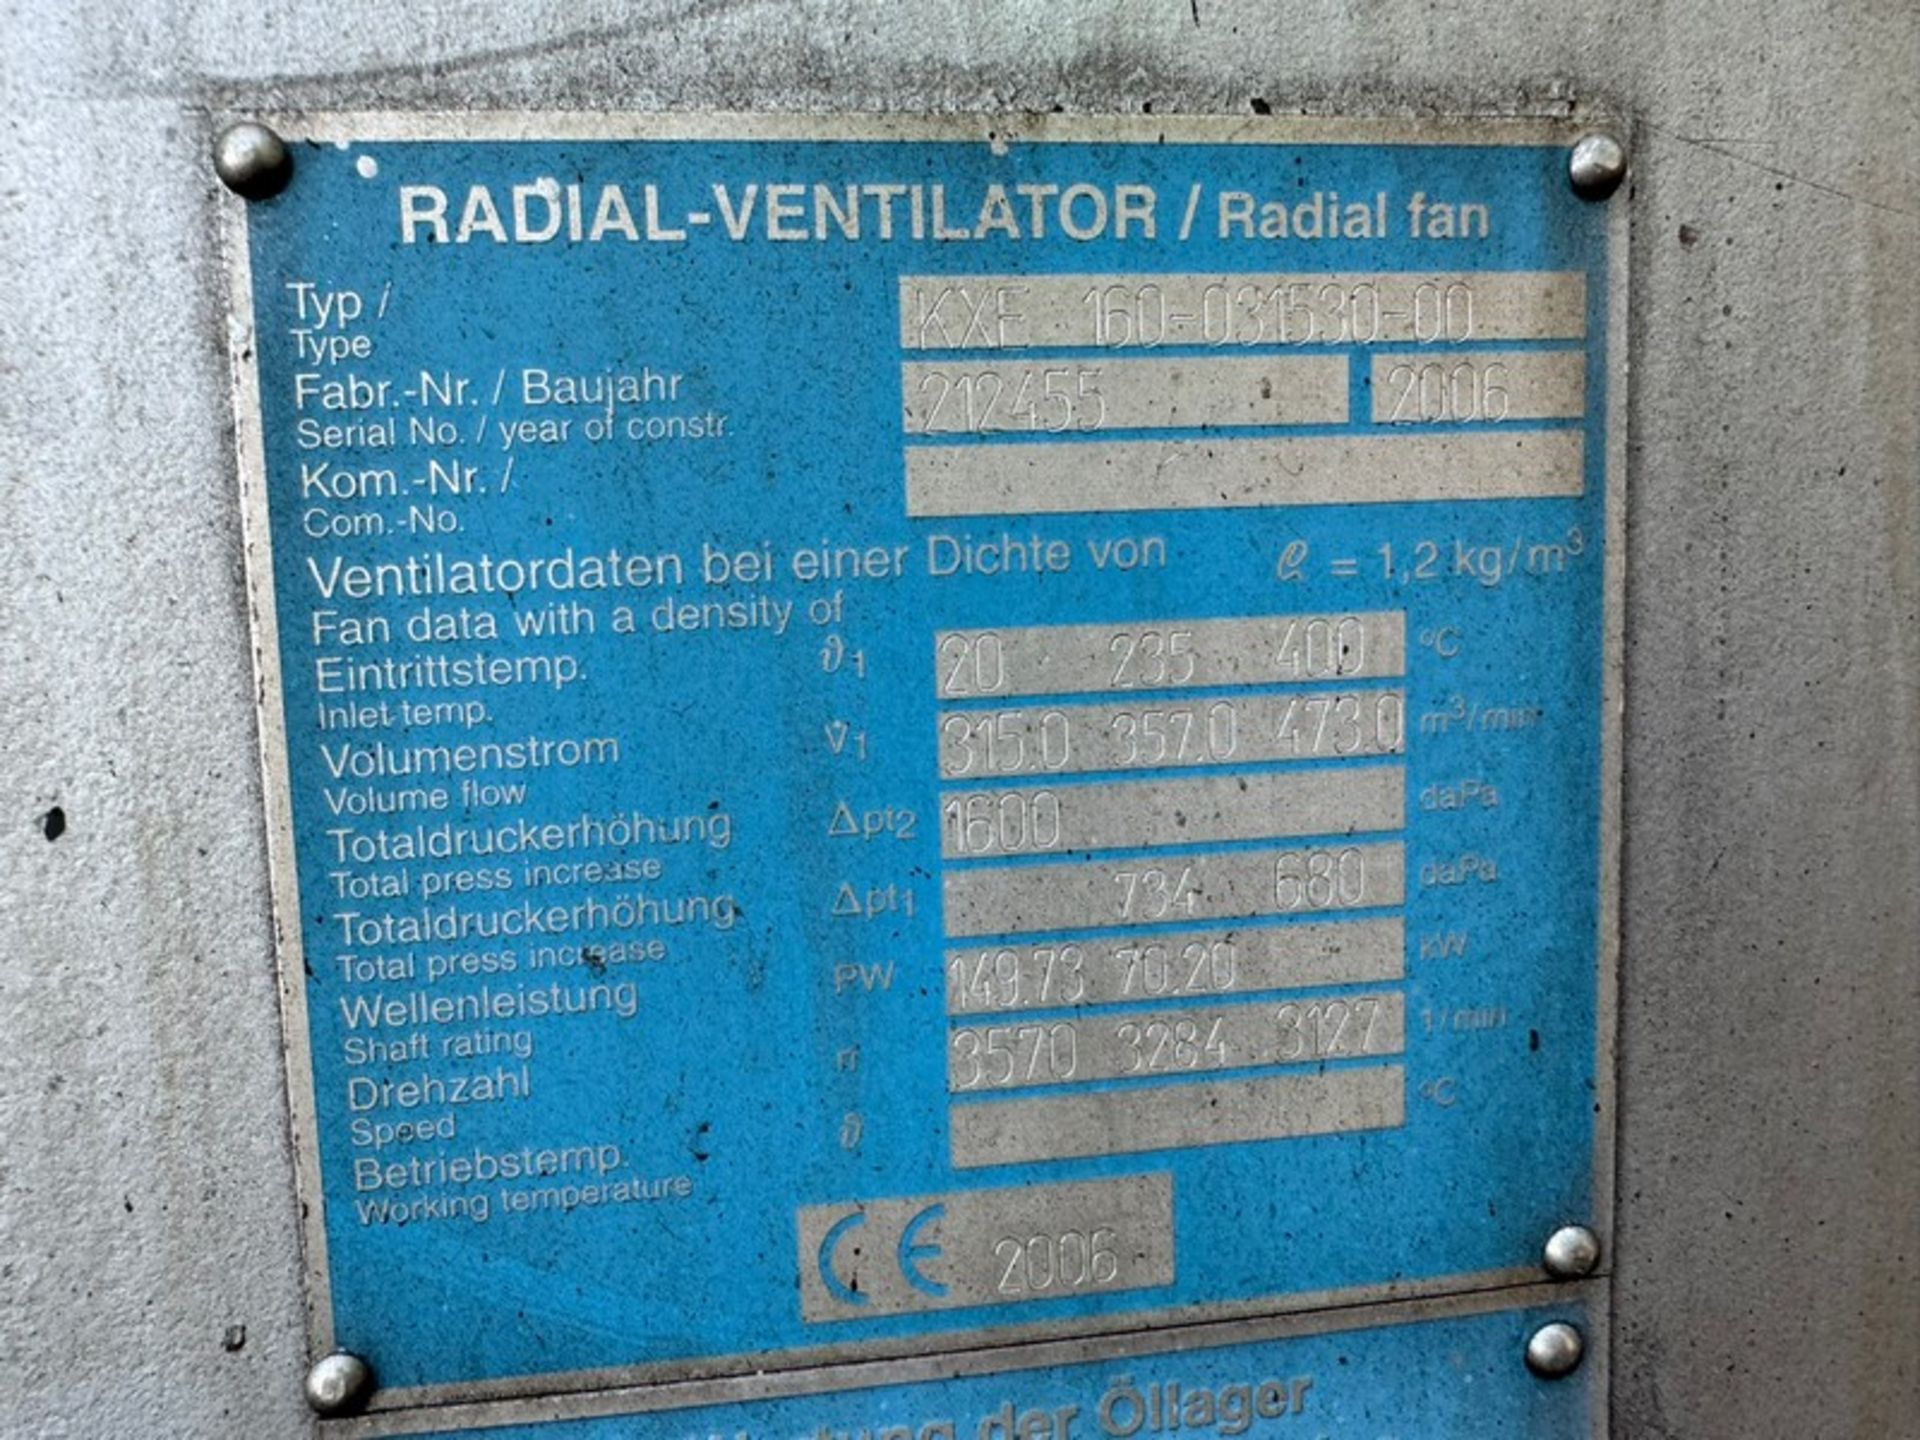 2006 Wartung der Öllager 90 kw Radial Hot Fan, Type: KXE 160-040030-00, S/N 212455, Includes - Image 4 of 8